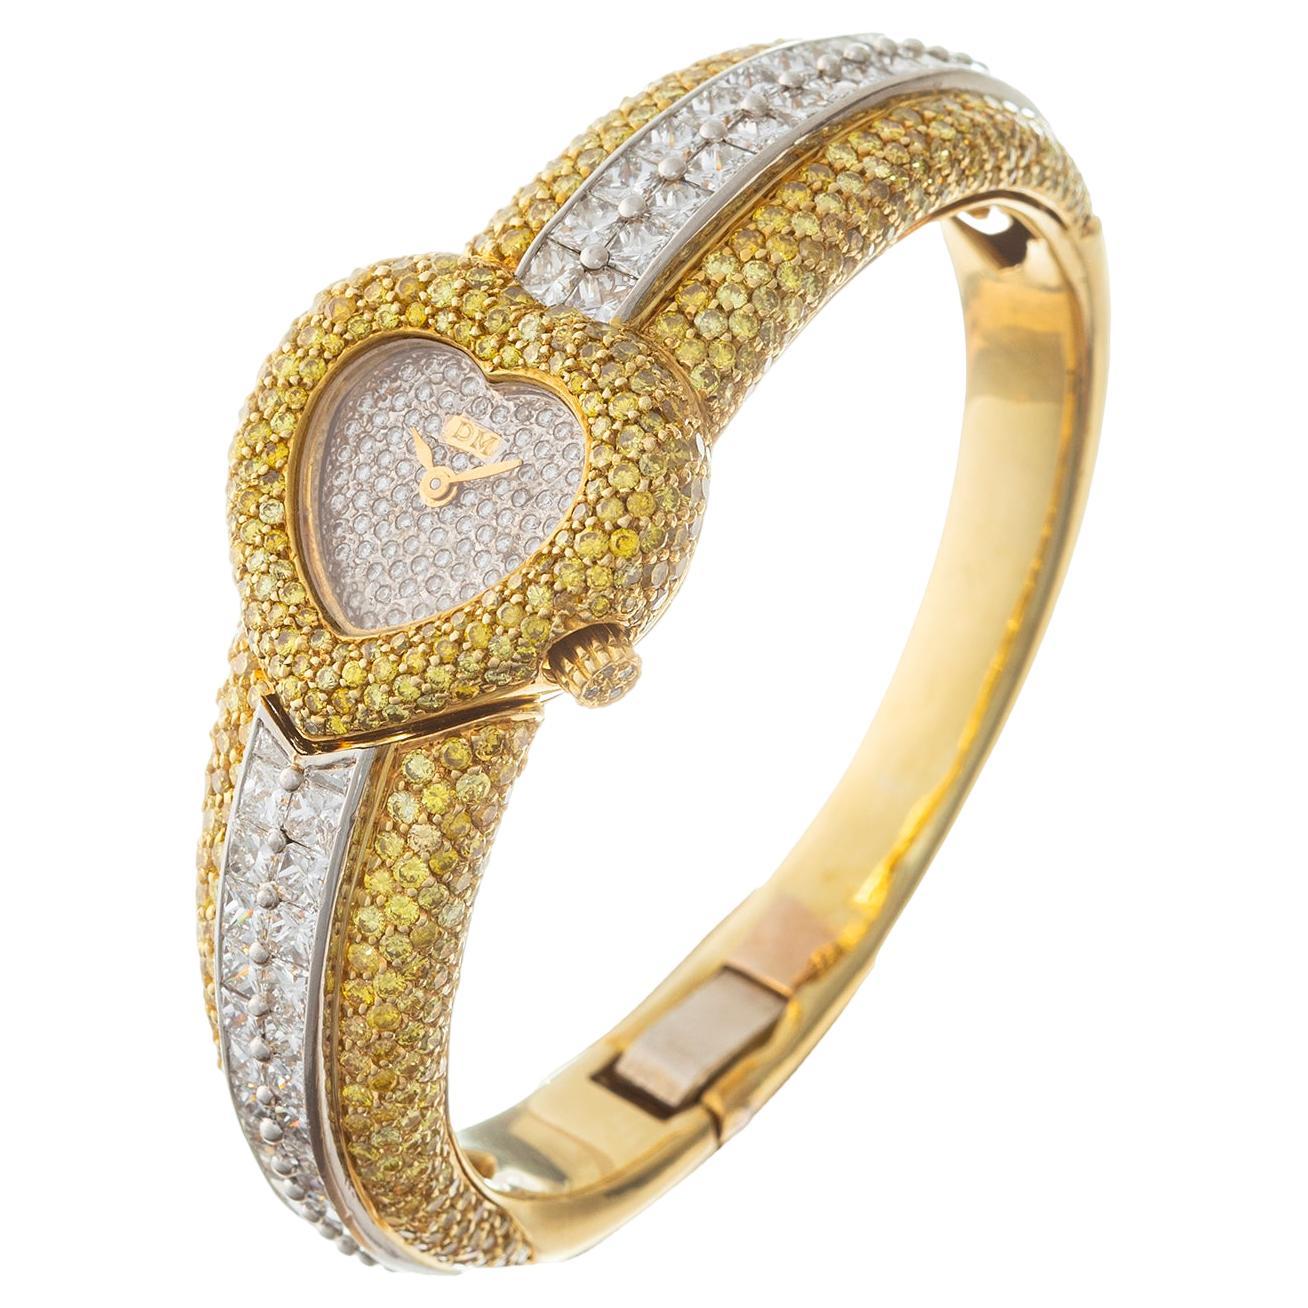 Ladies' fancy intense yellow diamond and white diamond bracelet watch in 18k yellow gold, featuring a quartz movement by Piaget; pavé-set white diamond dial; pavé-set round-cut natural fancy intense yellow diamond heart-shaped case. Bangle-style